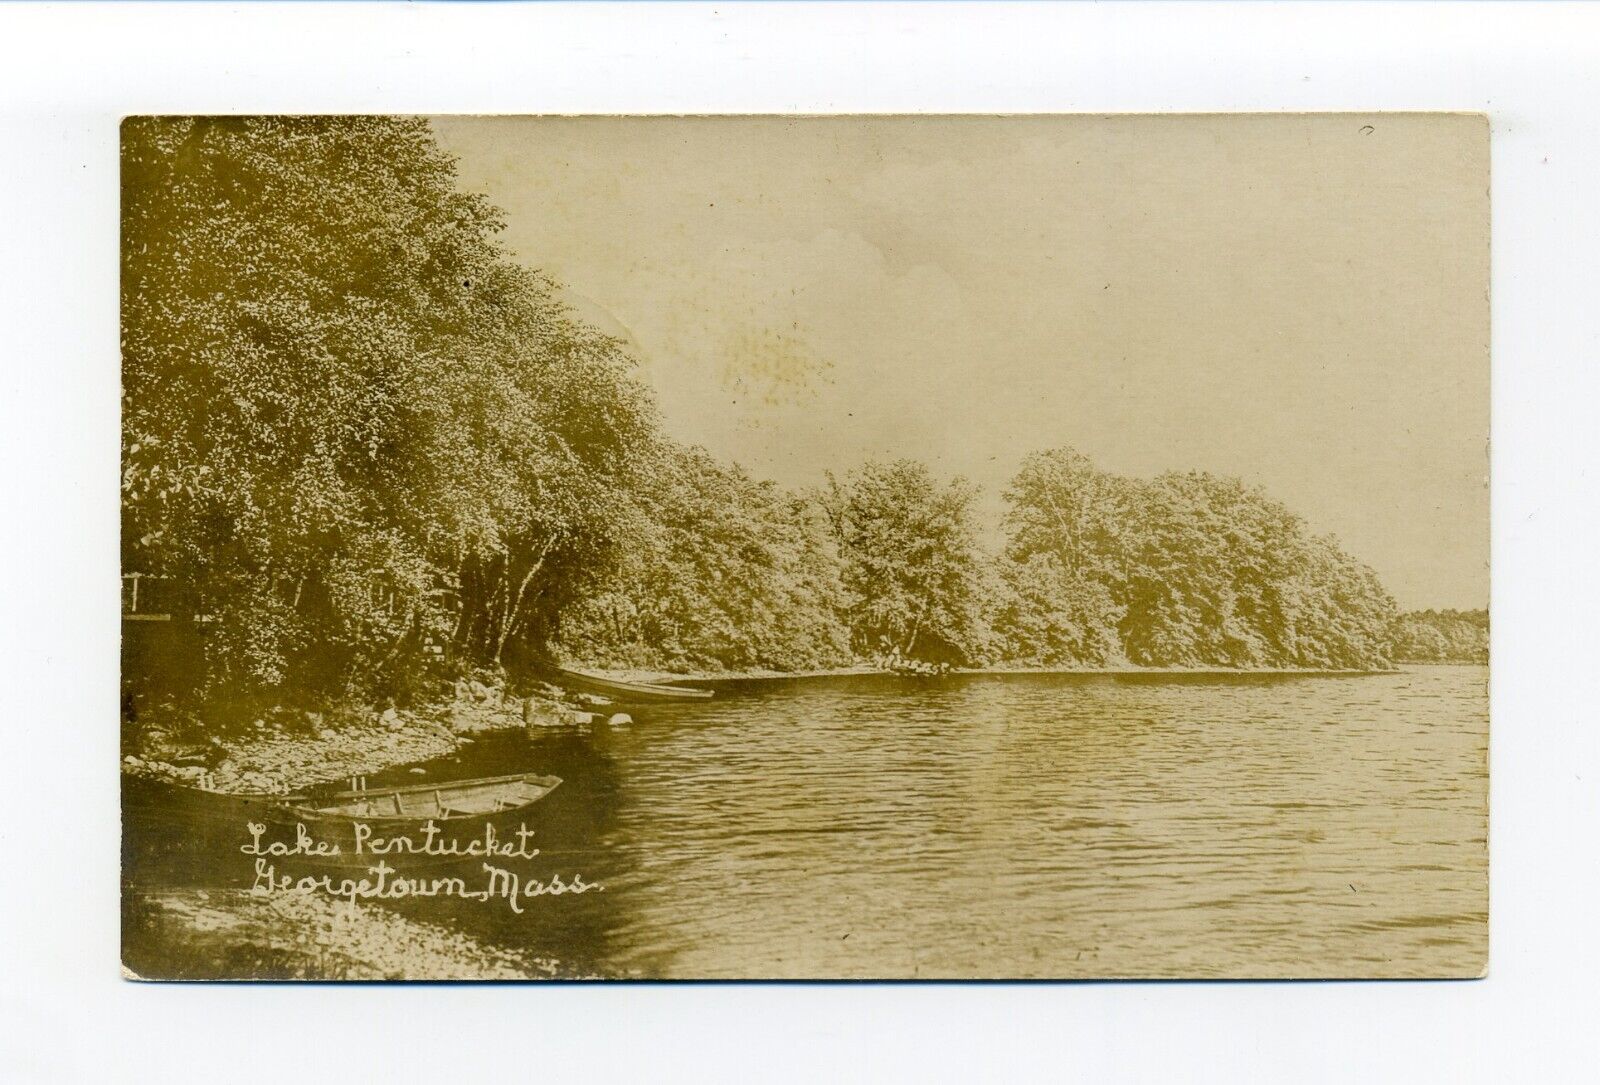 Georgetown MA RPPC photo postcard, Lake Pentucket, rowboat, trees along water